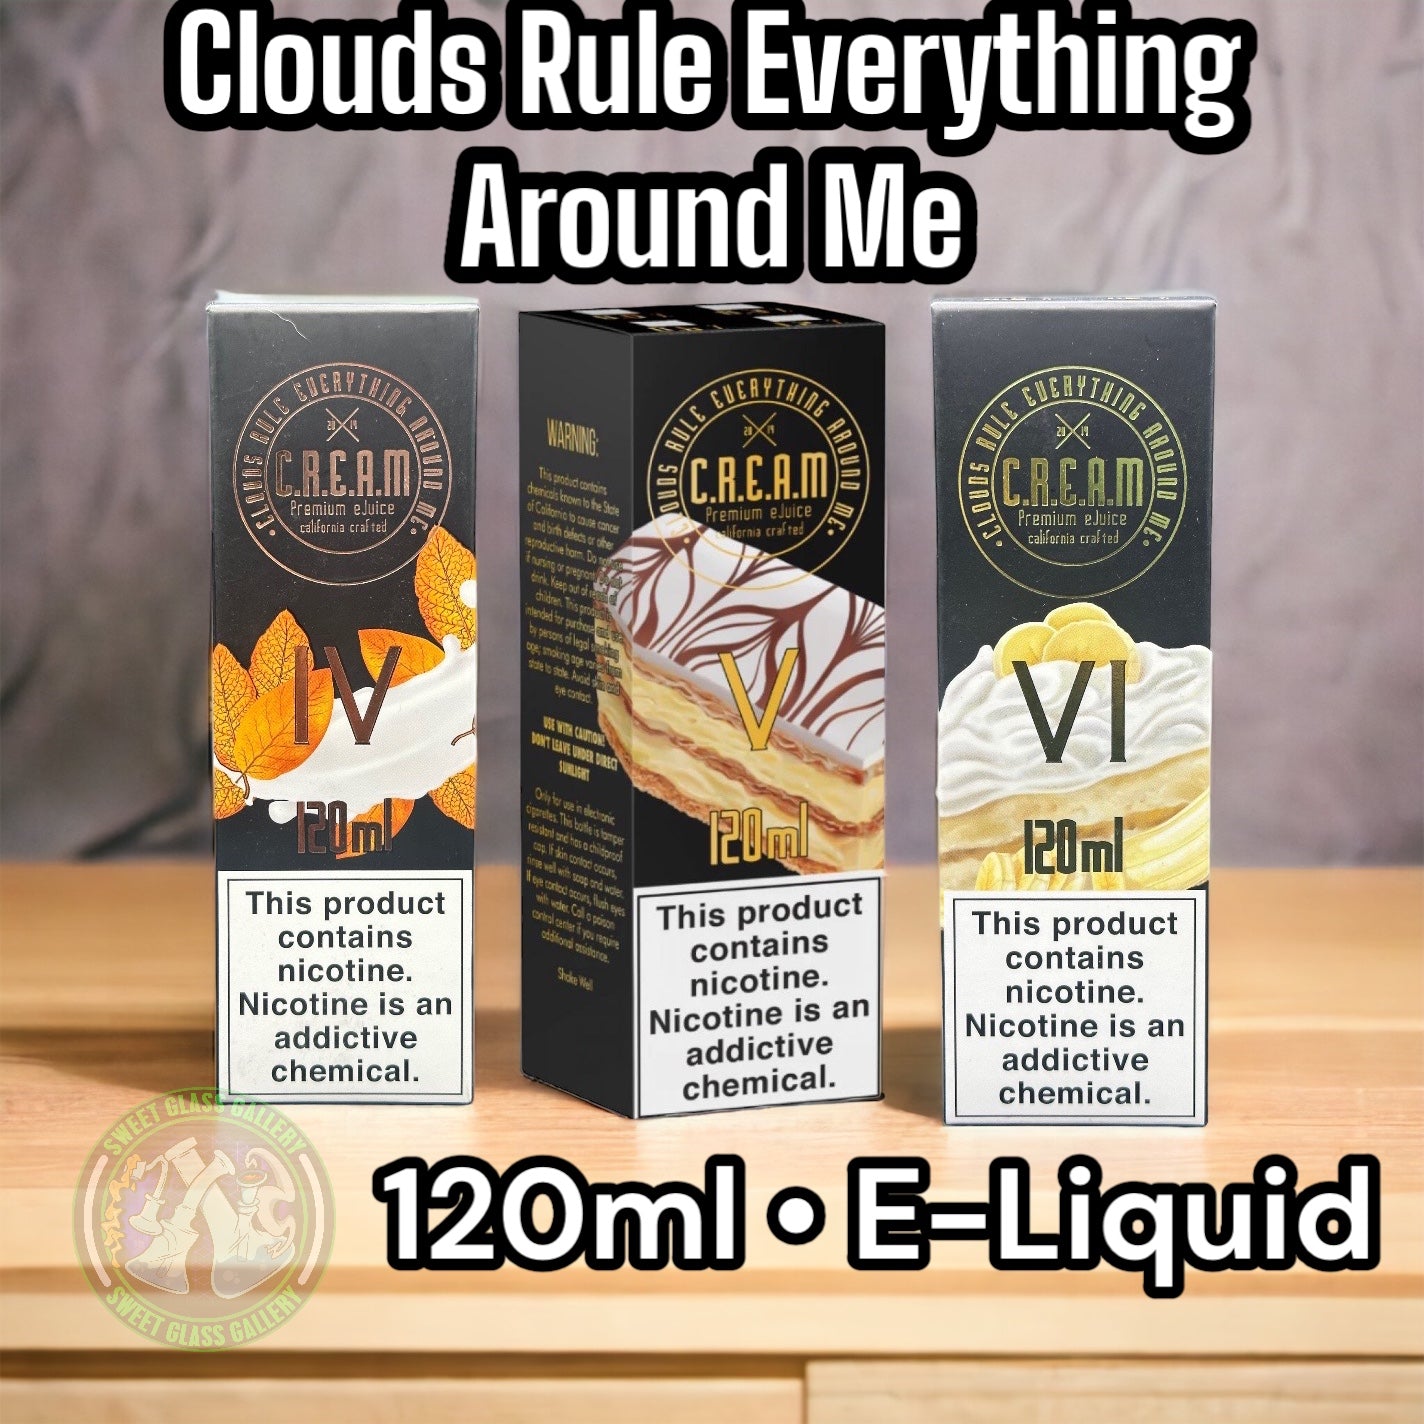 C.R.E.A.M - 120ml E-Liquid - Clouds Rule Everything Around Me